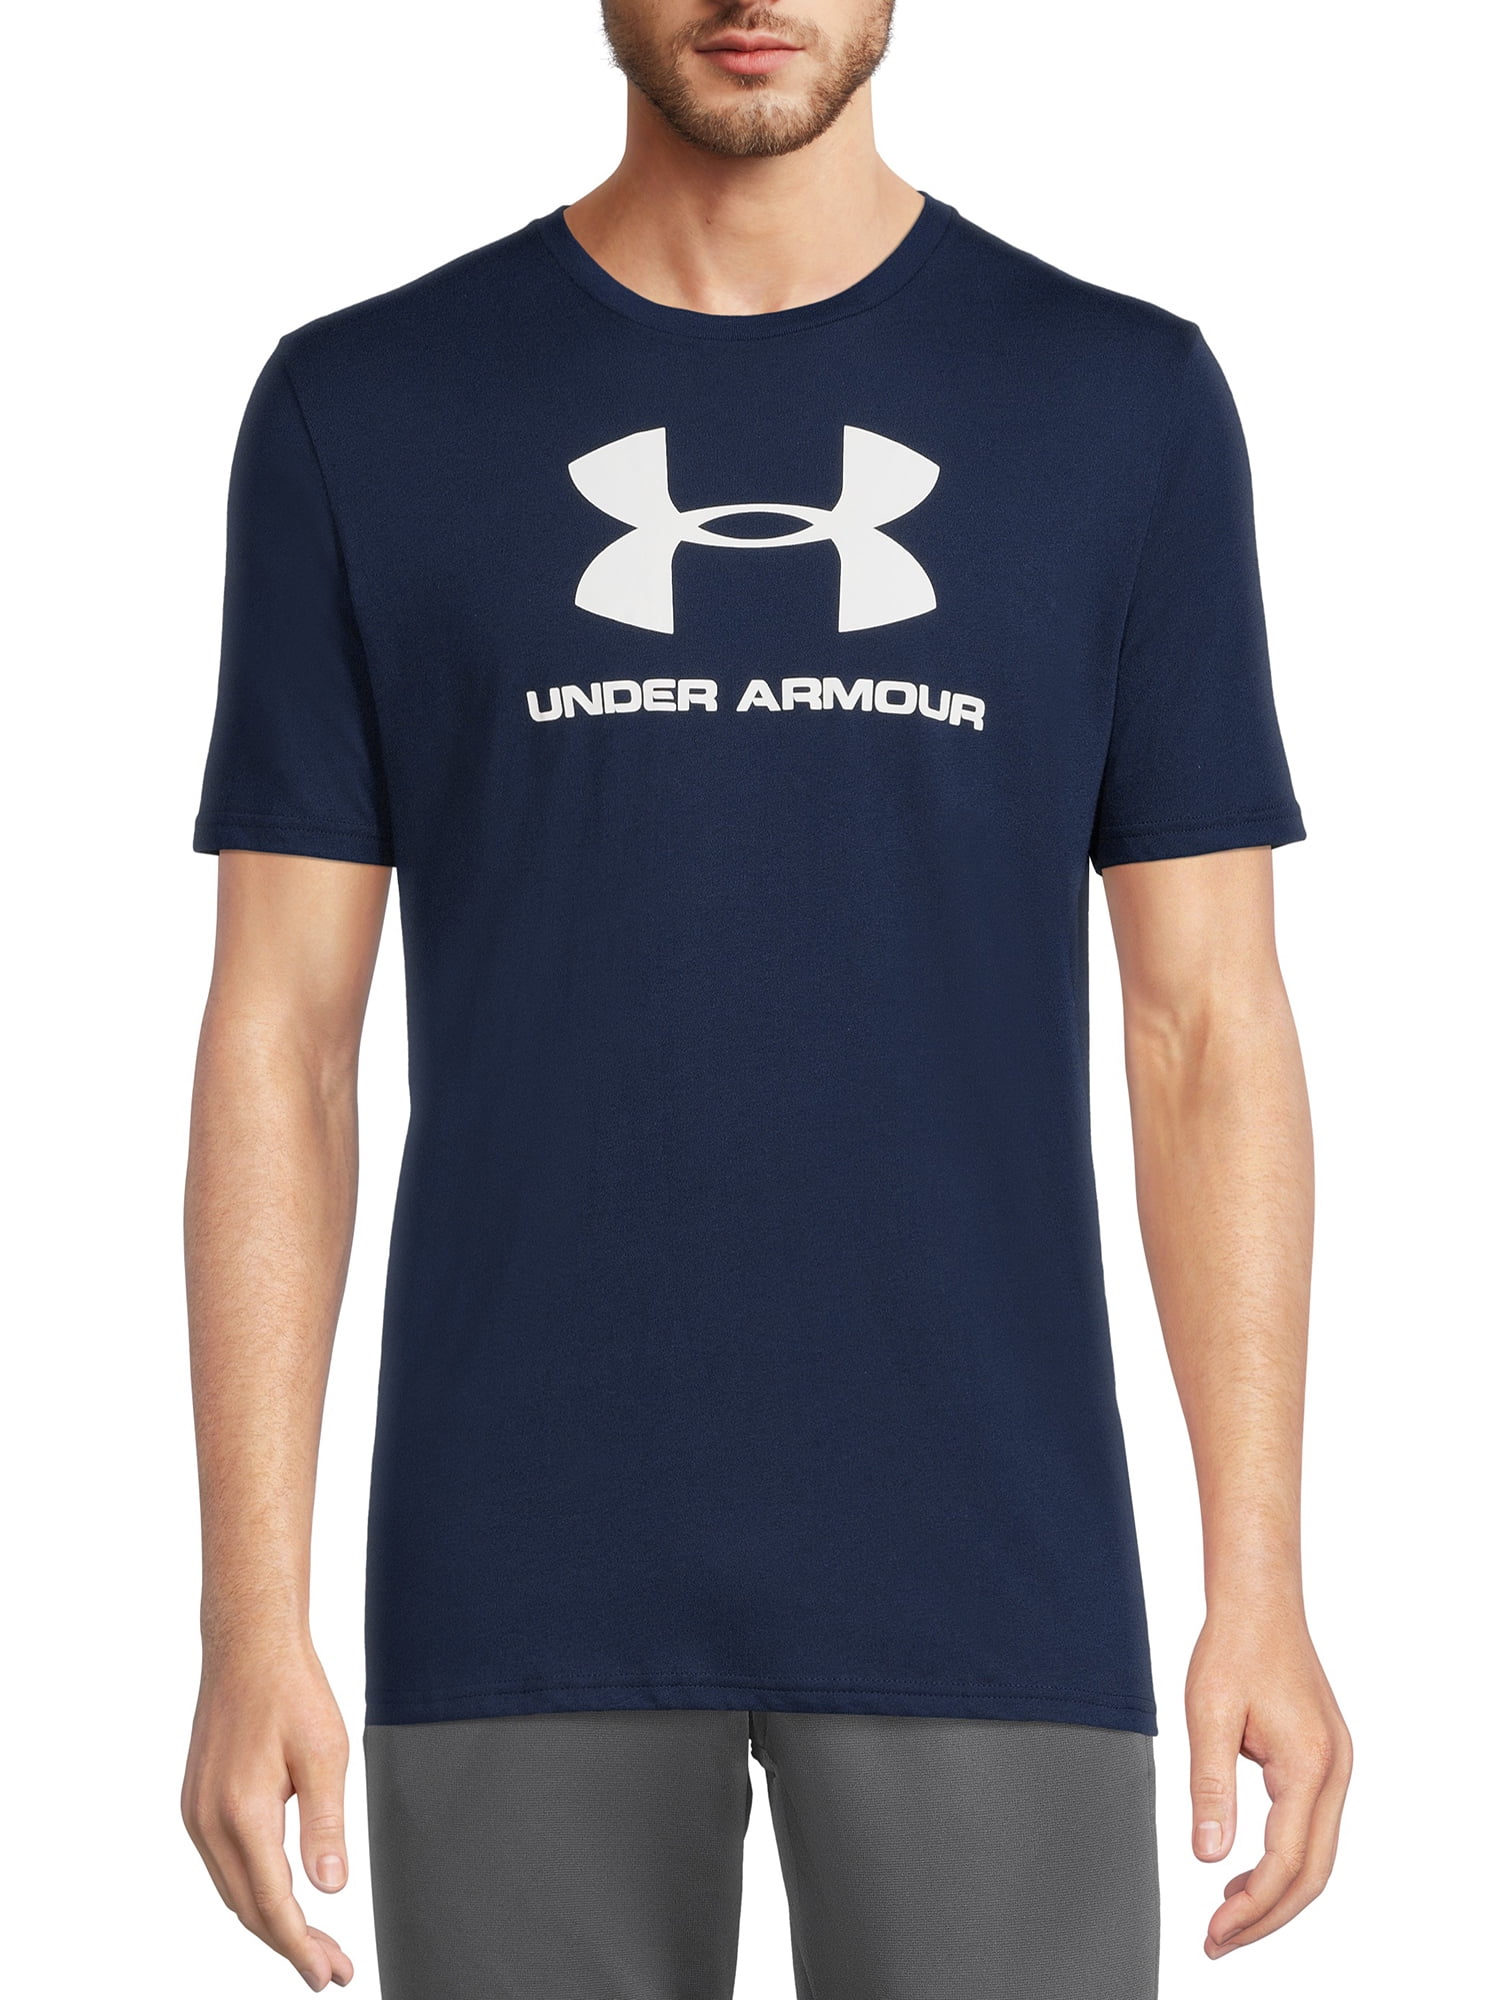 Under Armour Men's UA Freedom Banner Short Sleeve Athletic T-Shirt 1352147 